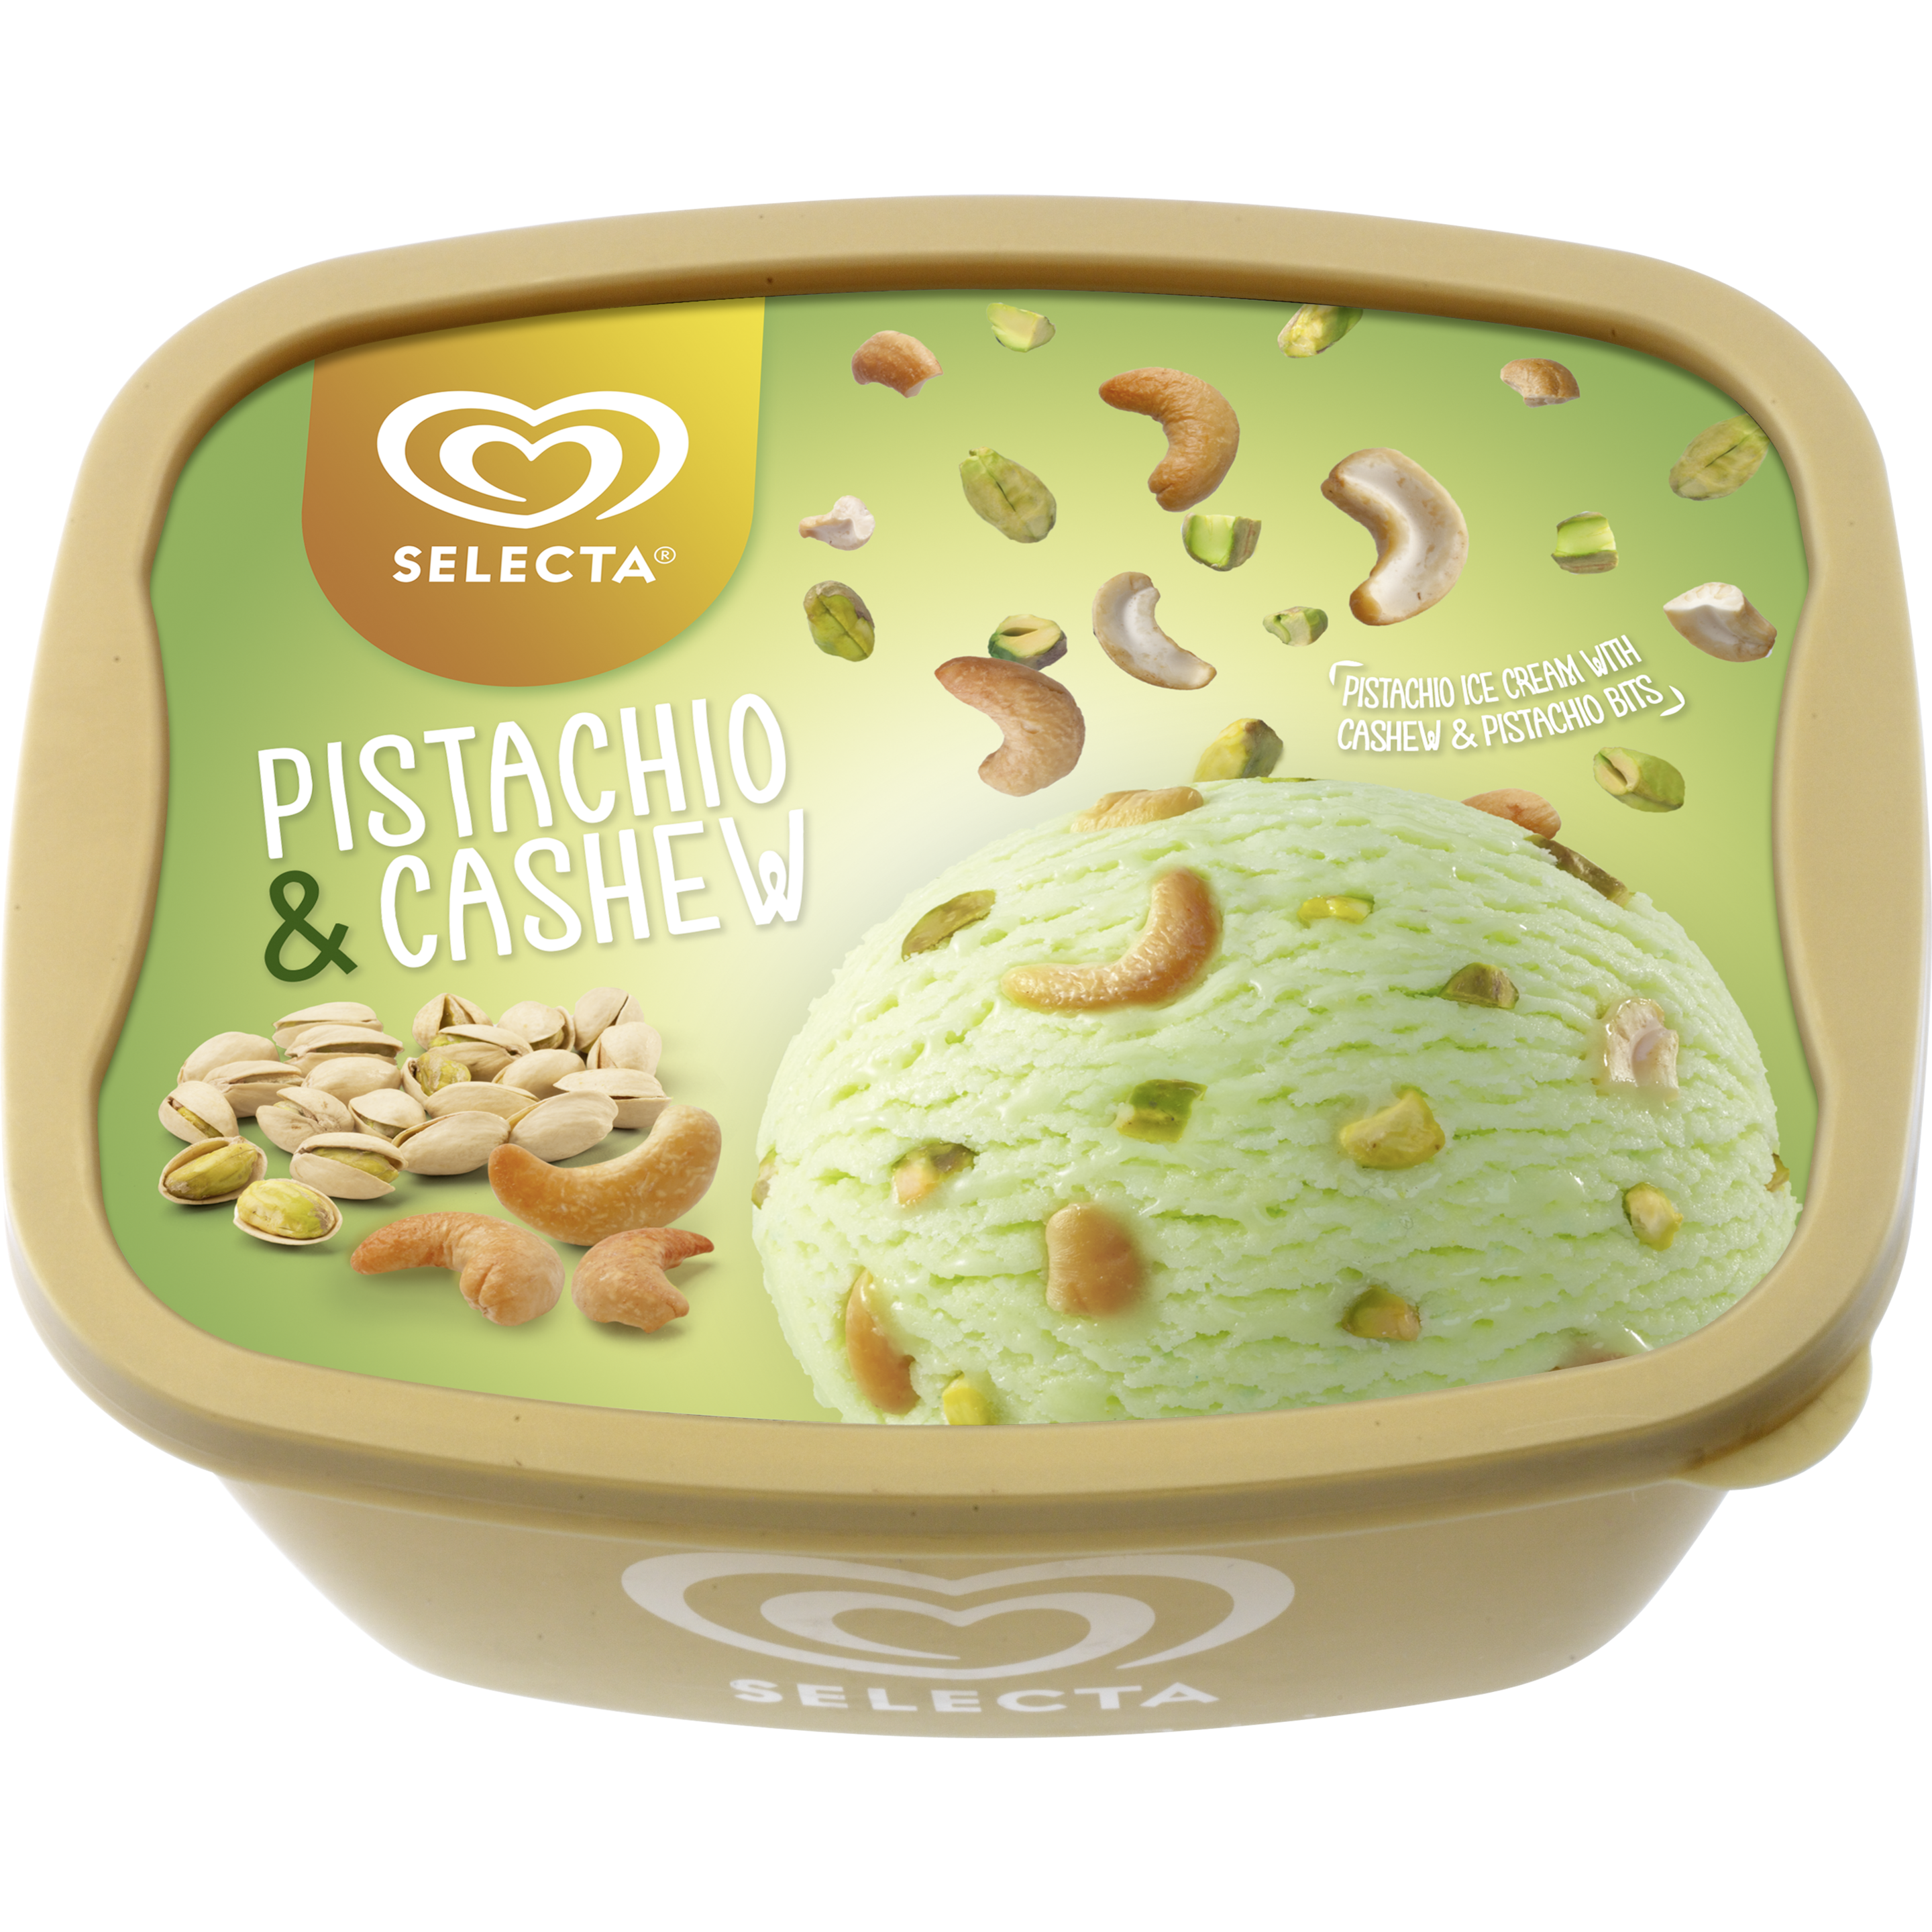 Selecta Pistachio & Cashew Ice Cream 1